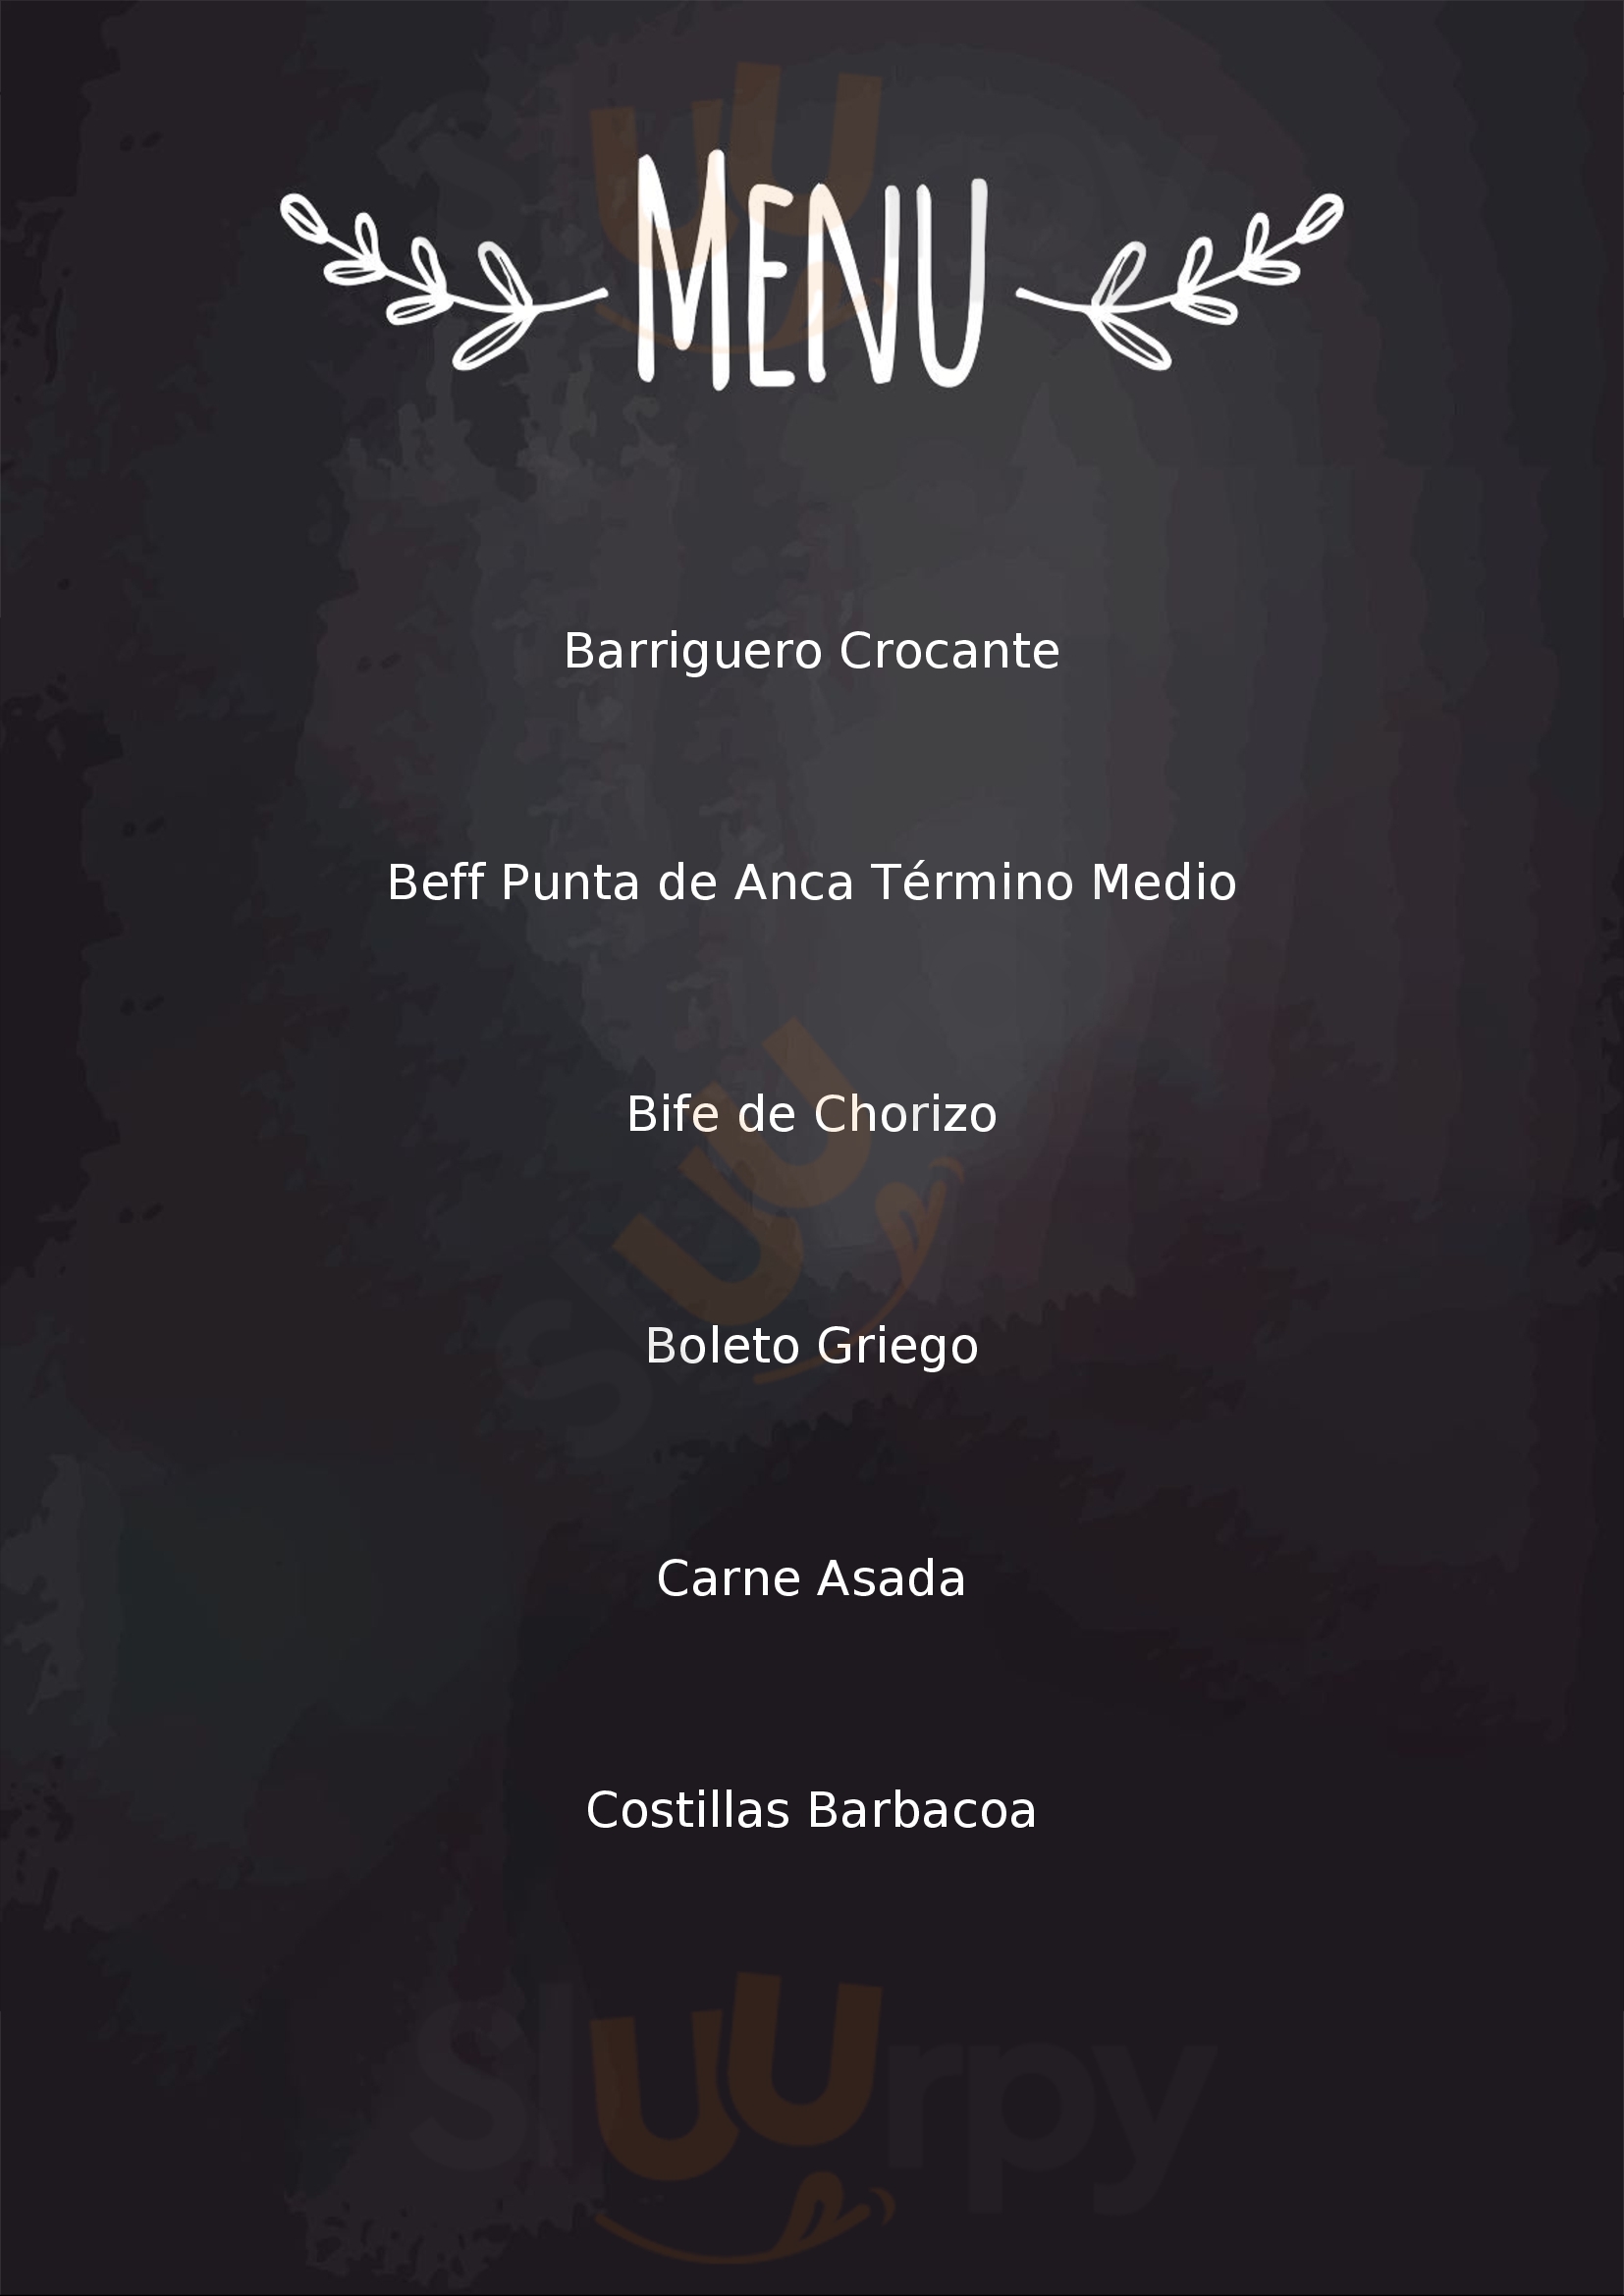 Steakhouse Madero Ibagué Menu - 1